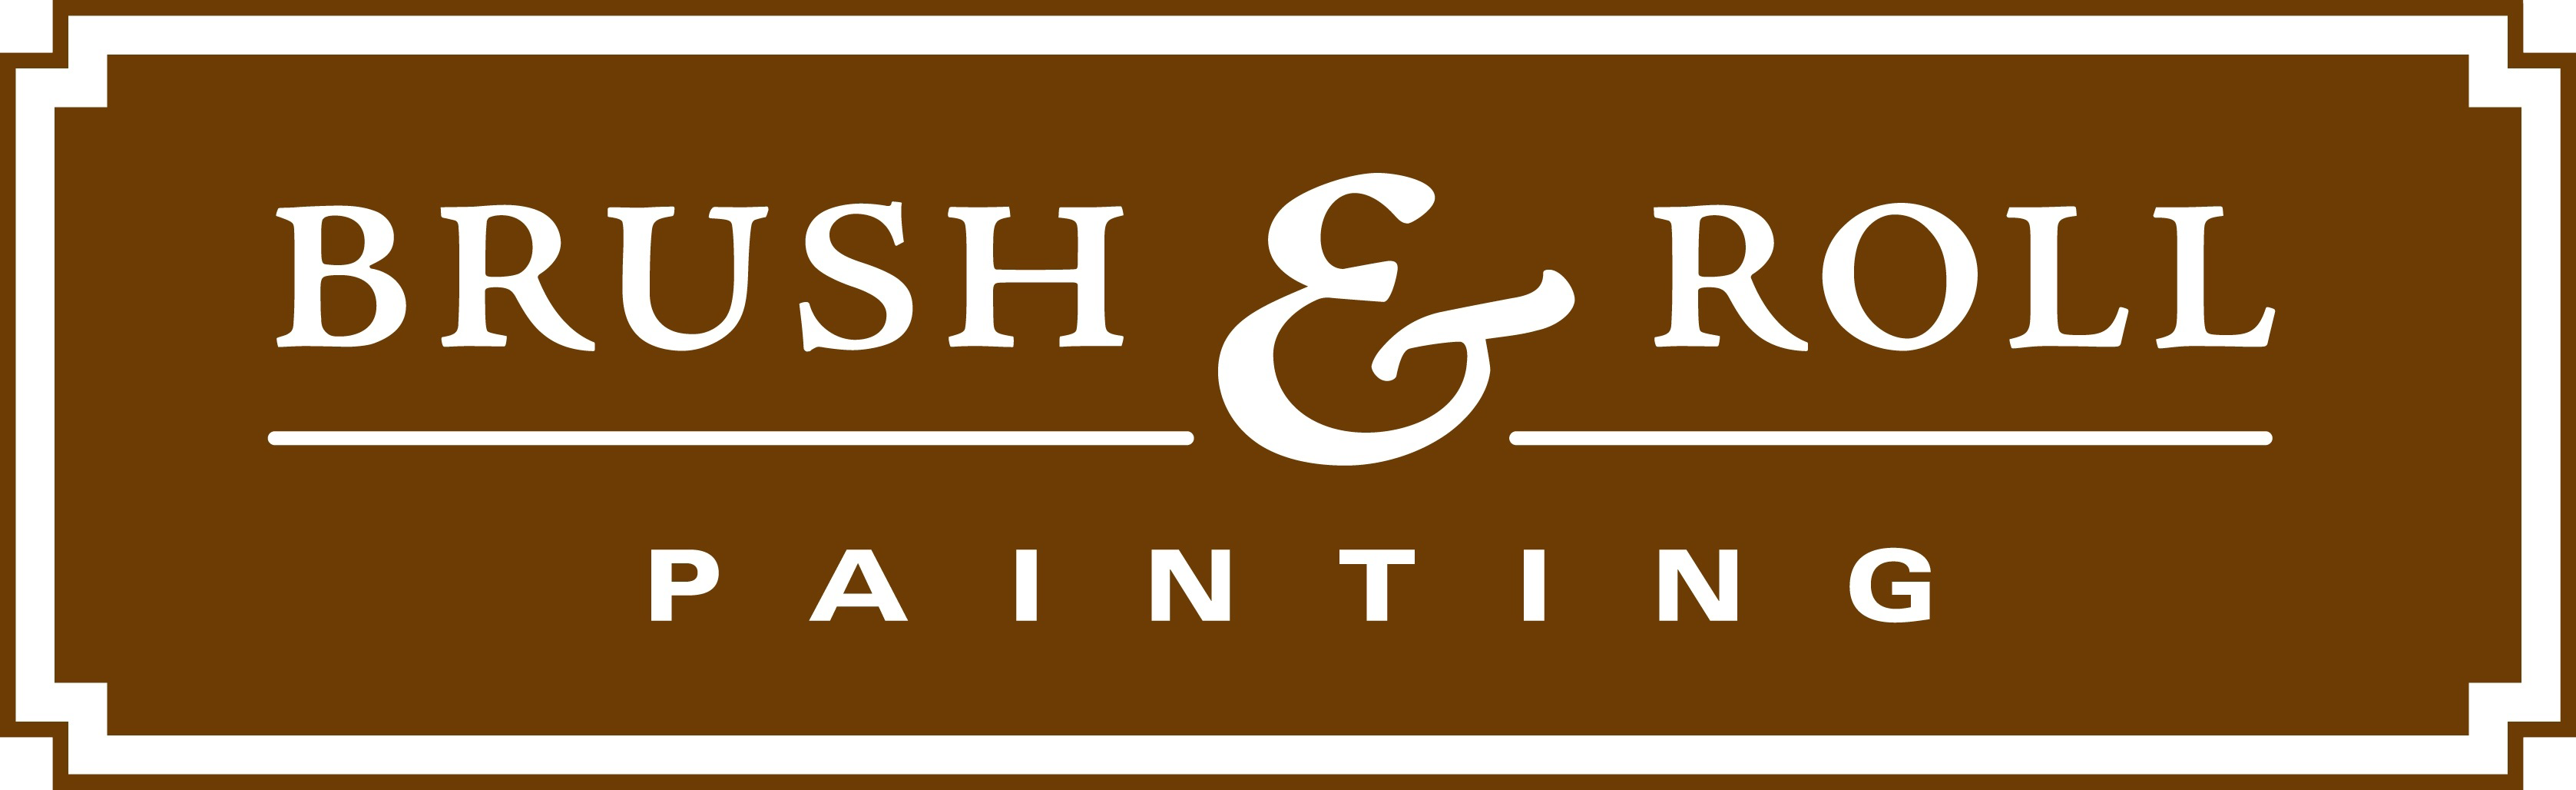 Brush & Roll Painting logo.